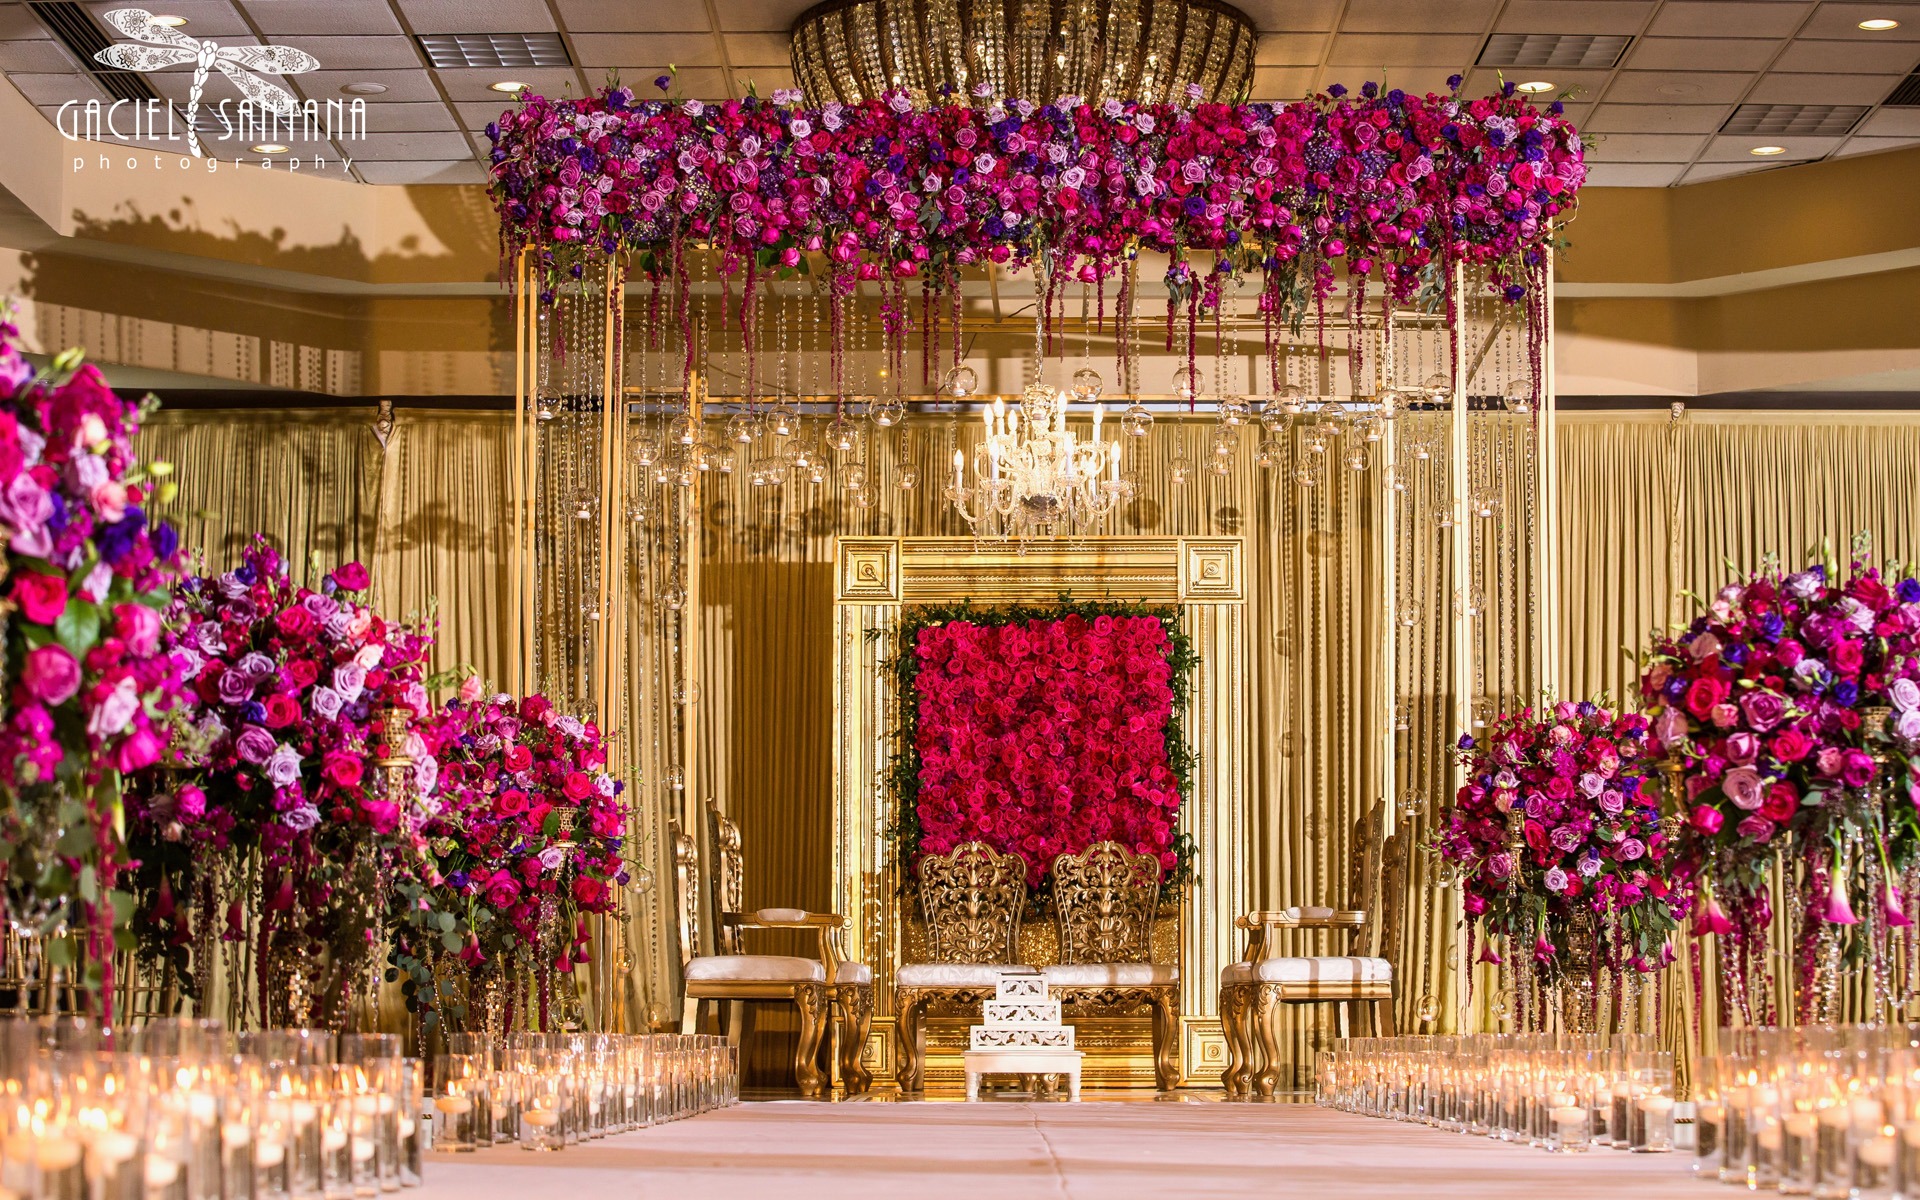 Splendid Ceremony Bollywood Glam 1 South Asian Indian Wedding Decor Design Suhaag Garden Florida